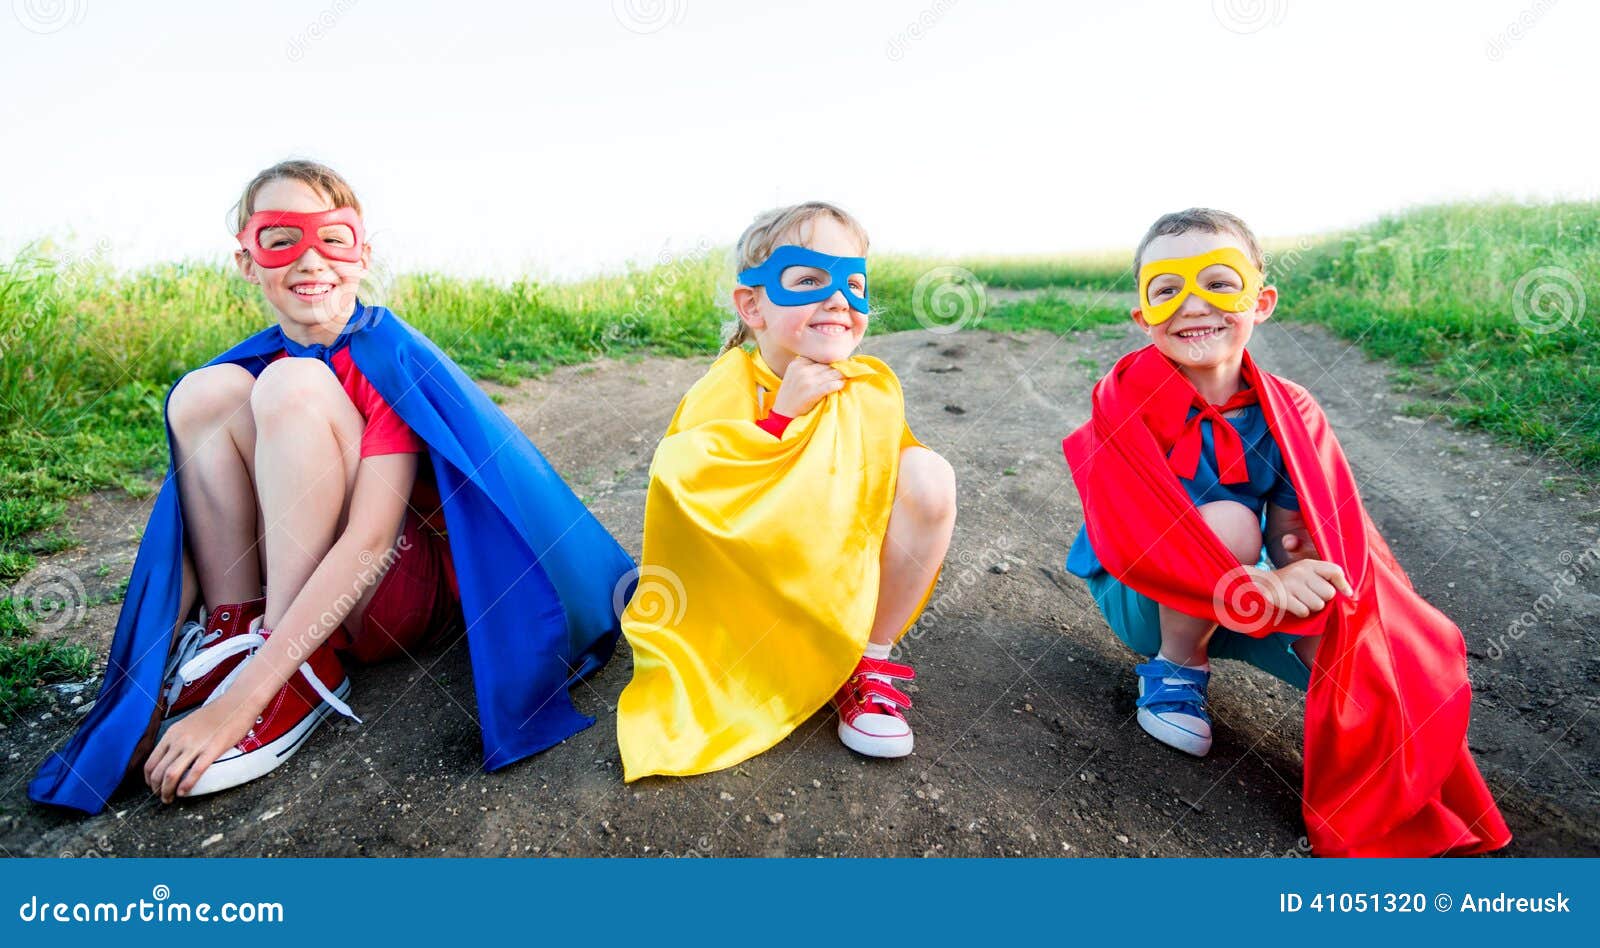 children super hero